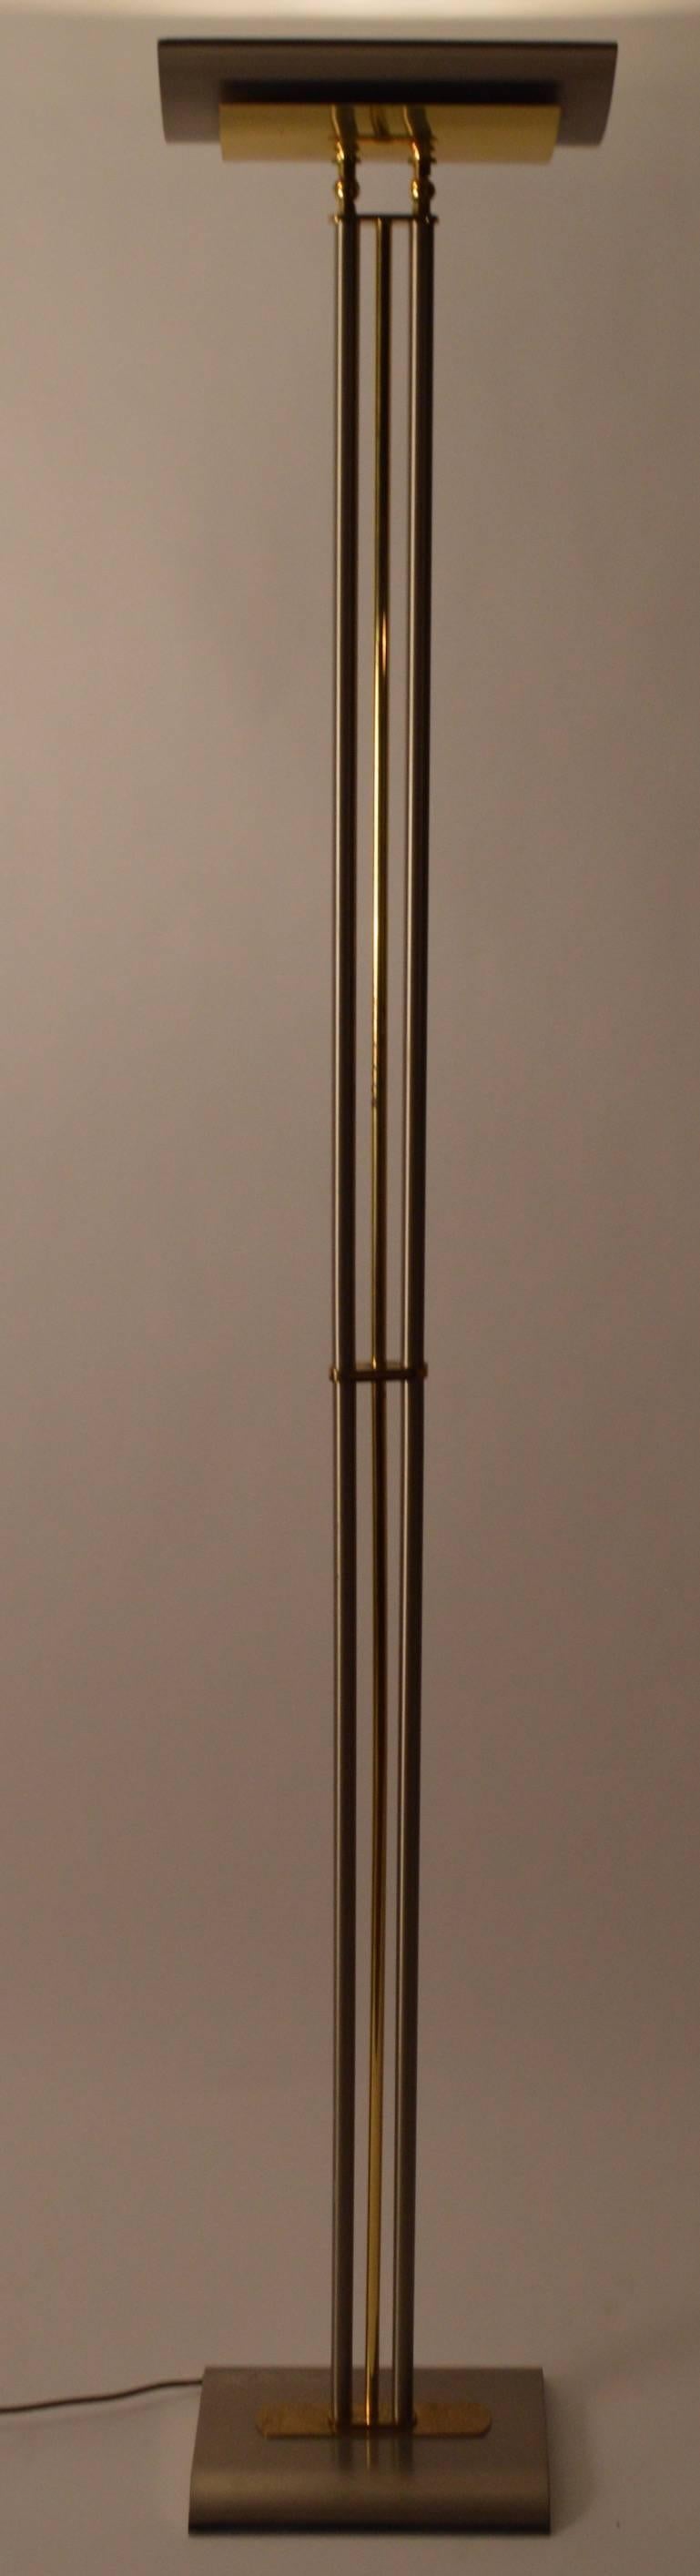 Postmodern Italian design torchiere floor lamp. Halogen light with tilt adjustable top. Manufactured by 